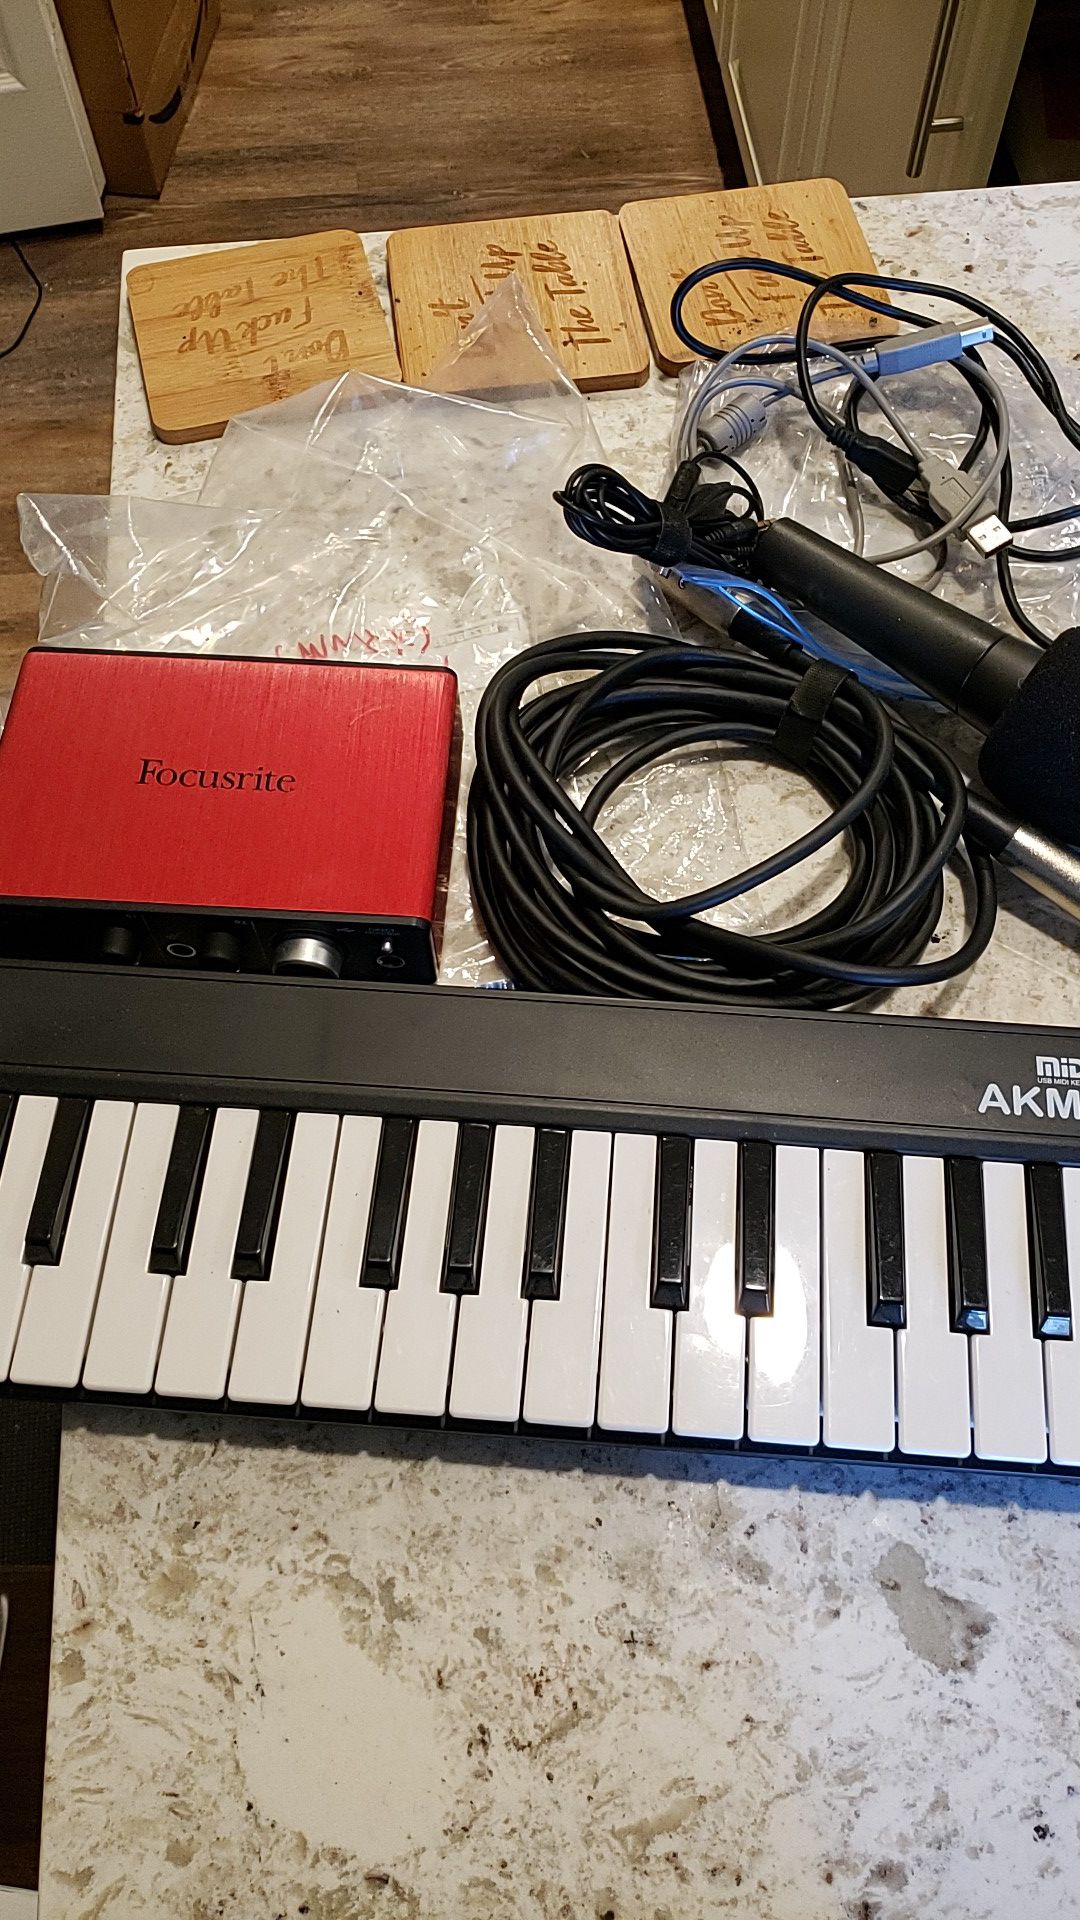 Value package: Midiplus akm320 musical keyboard, focusrite audio interface, mic